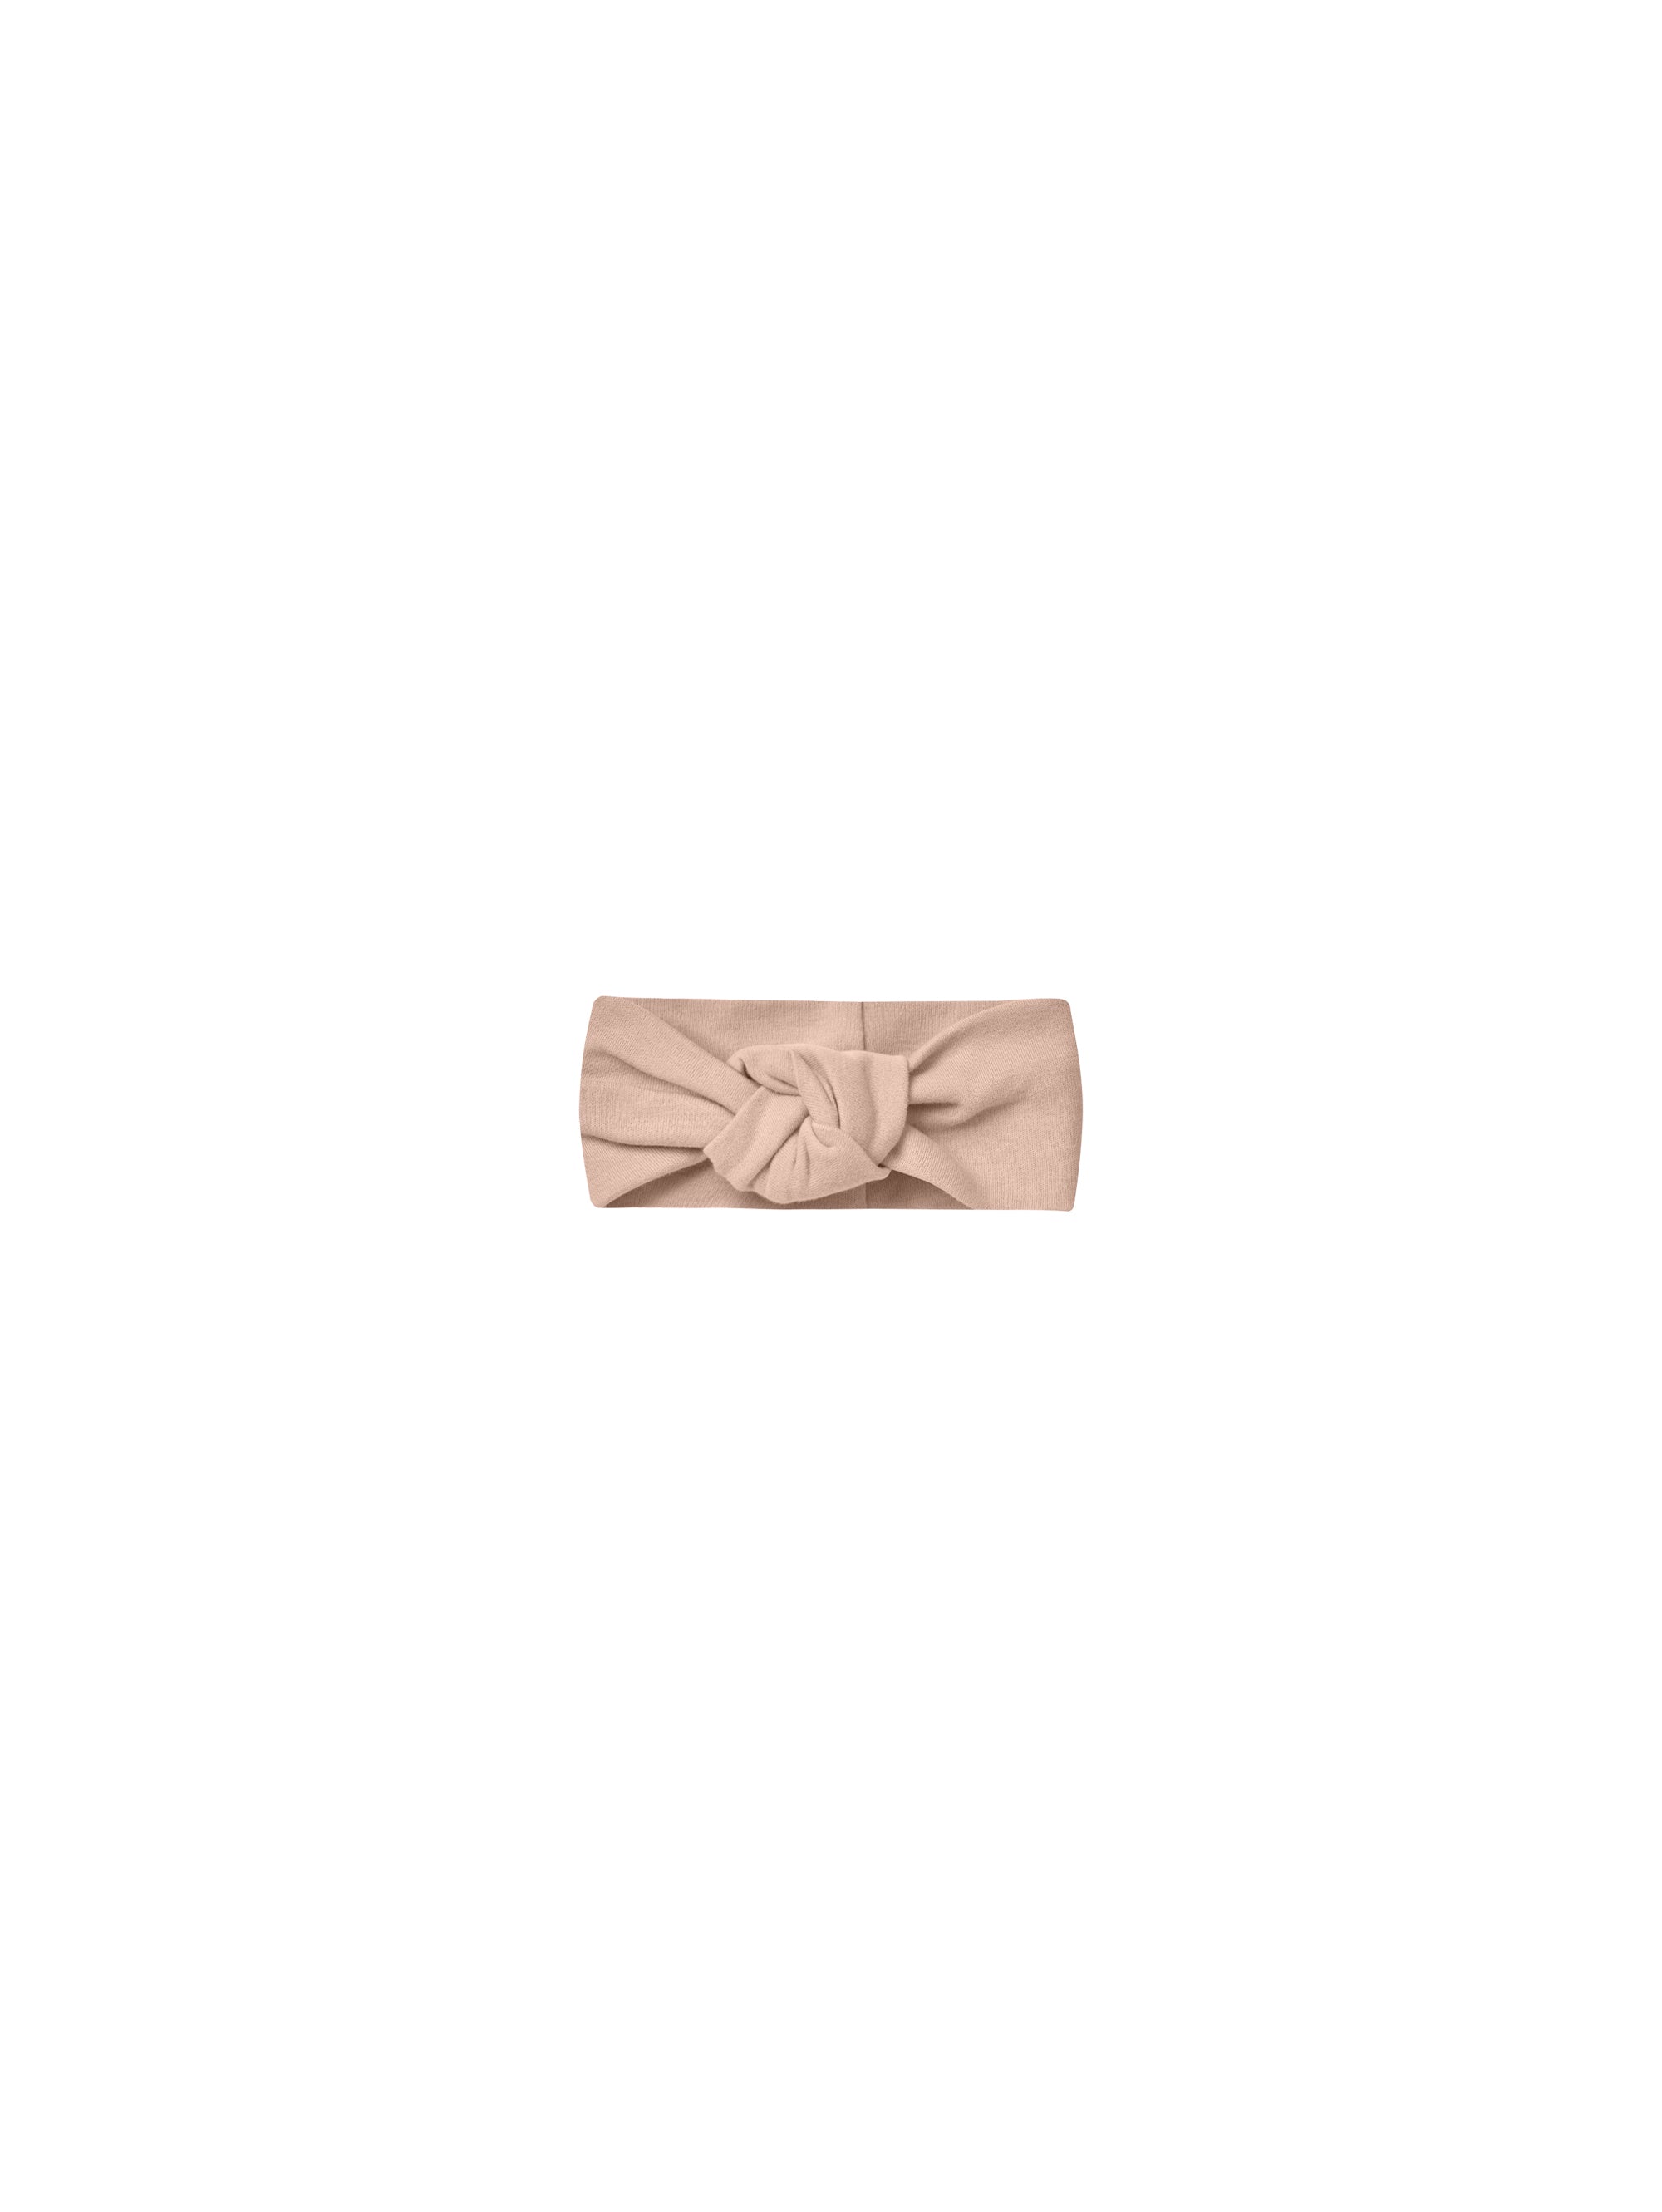 Blush Knotted Headband - Twinkle Twinkle Little One